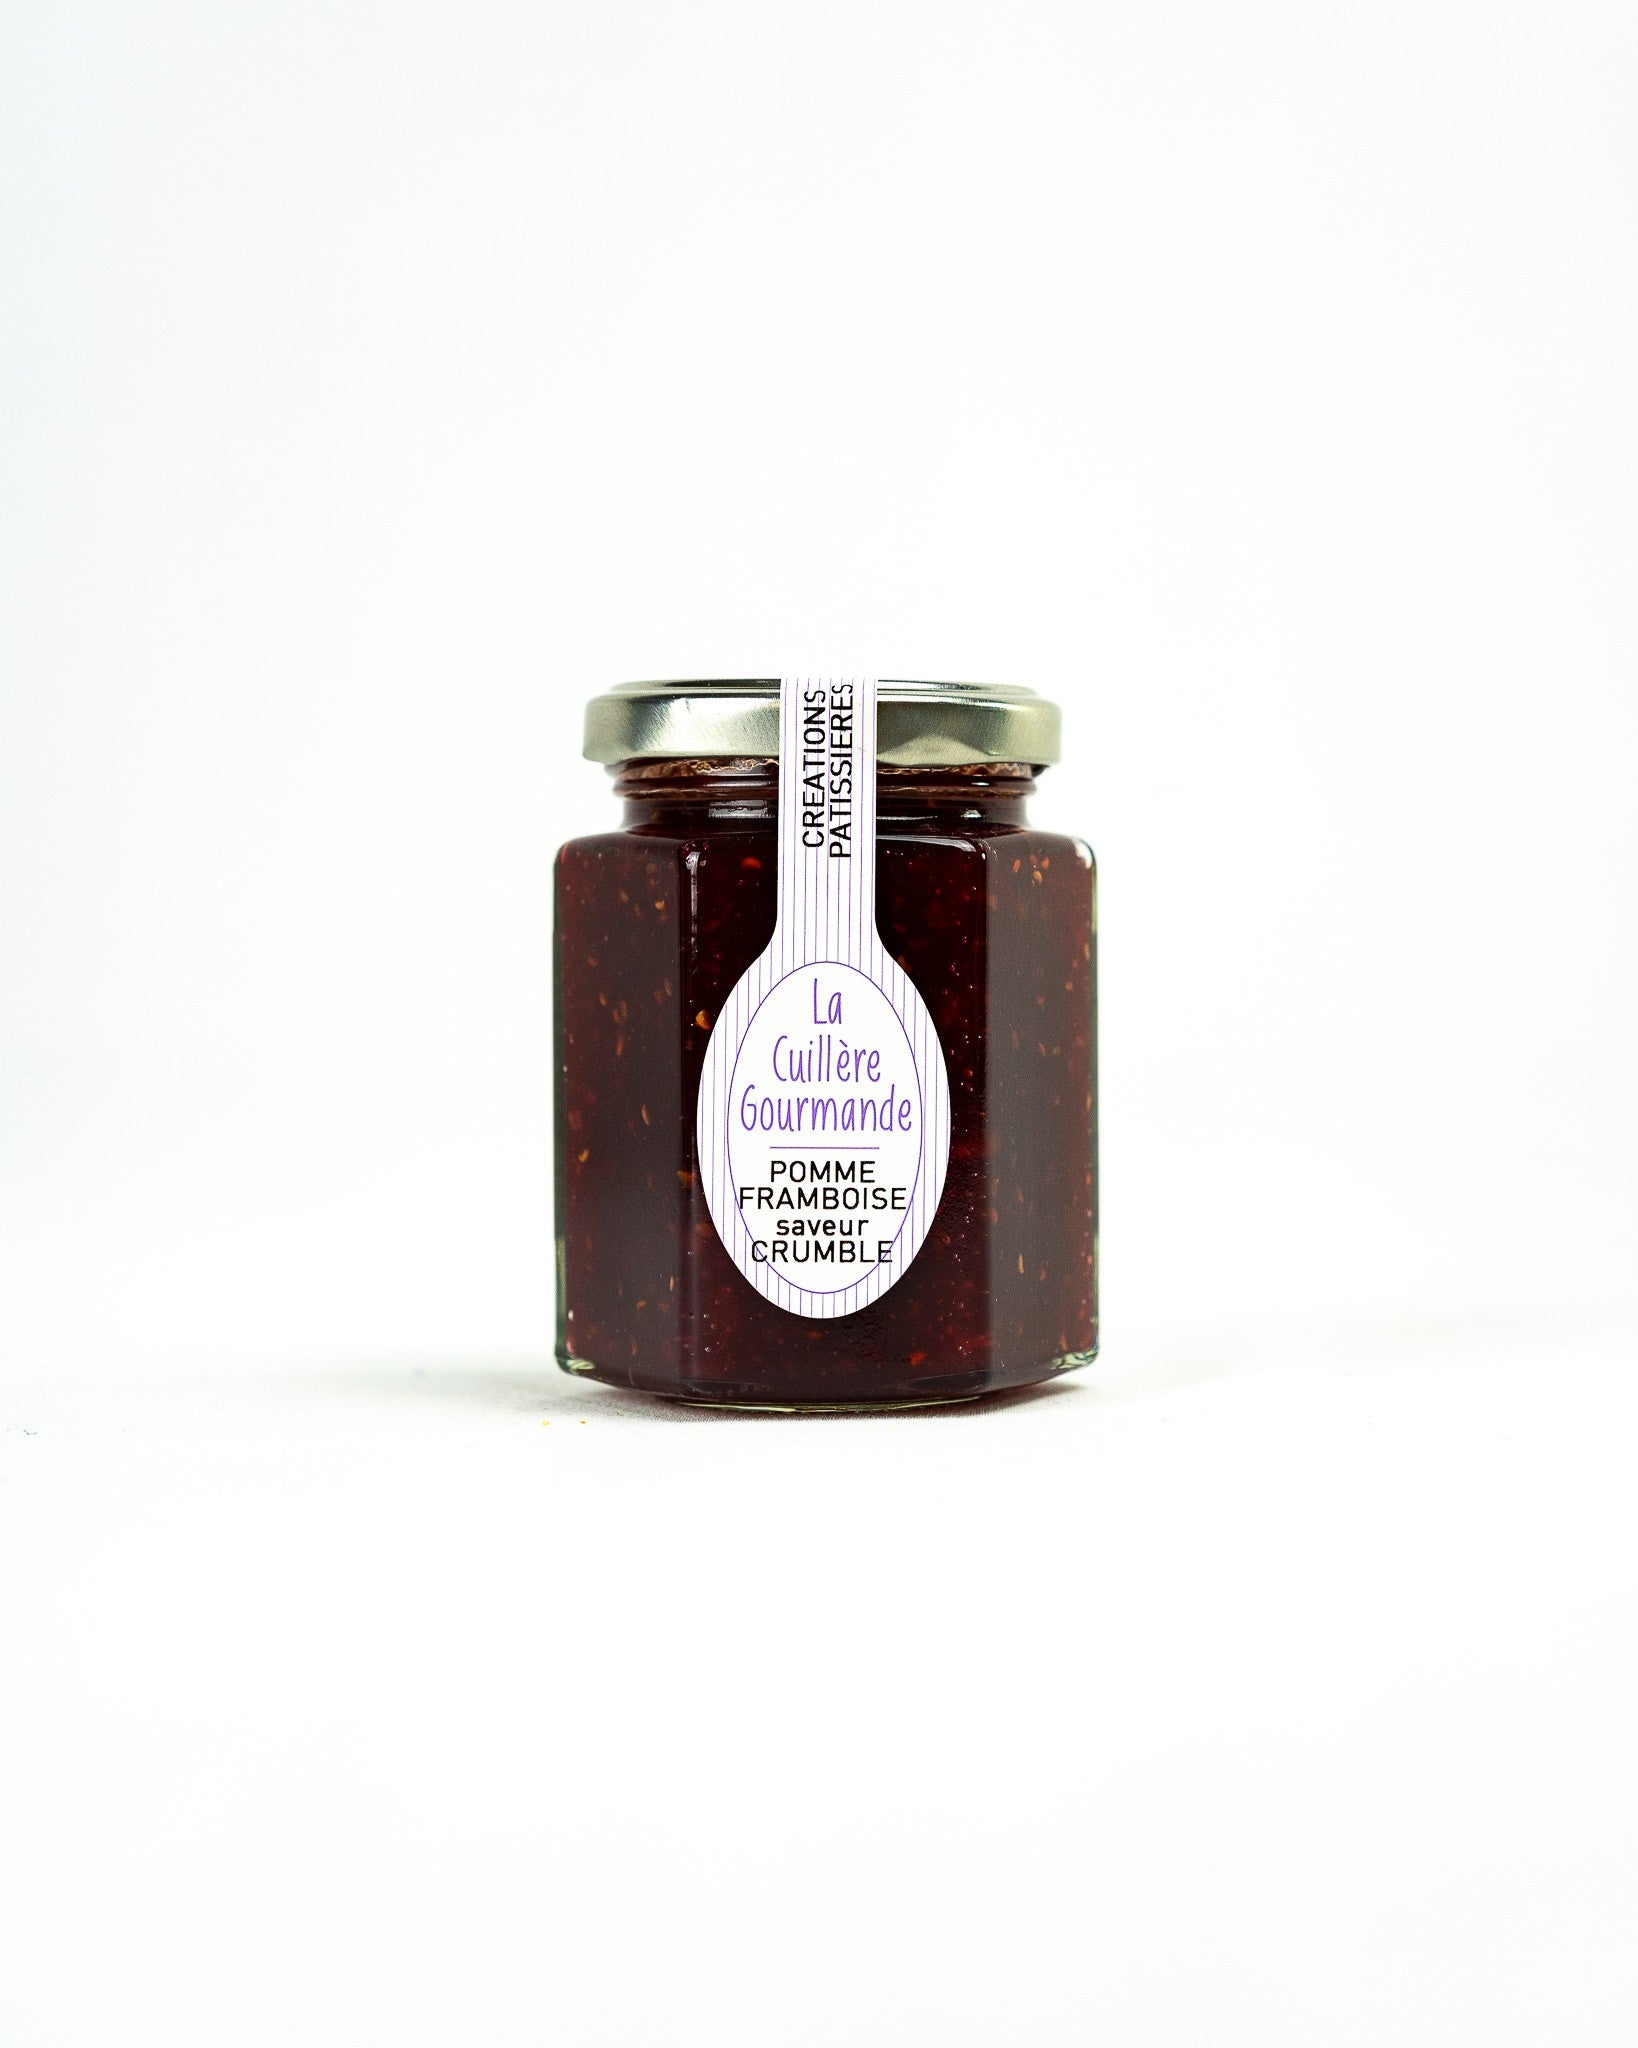 Apple raspberry jam with crumble flavor